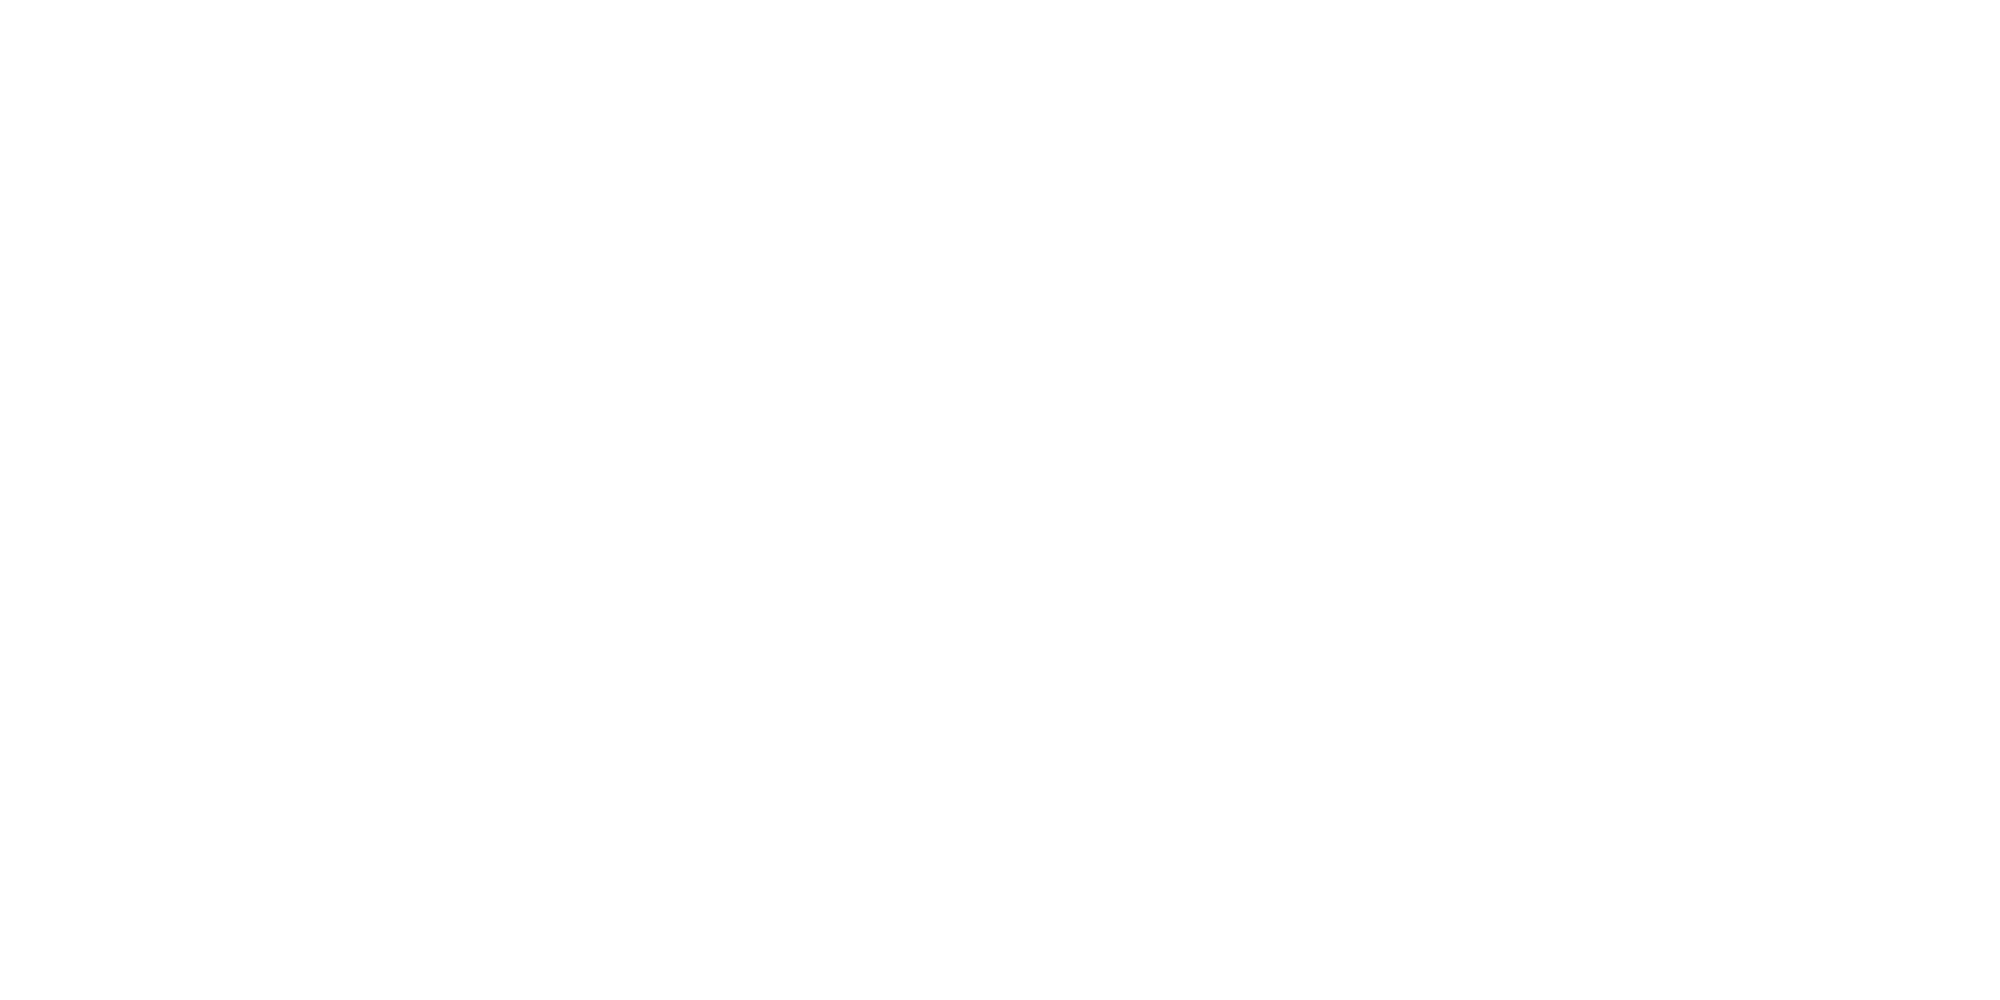 tplink logo transparant